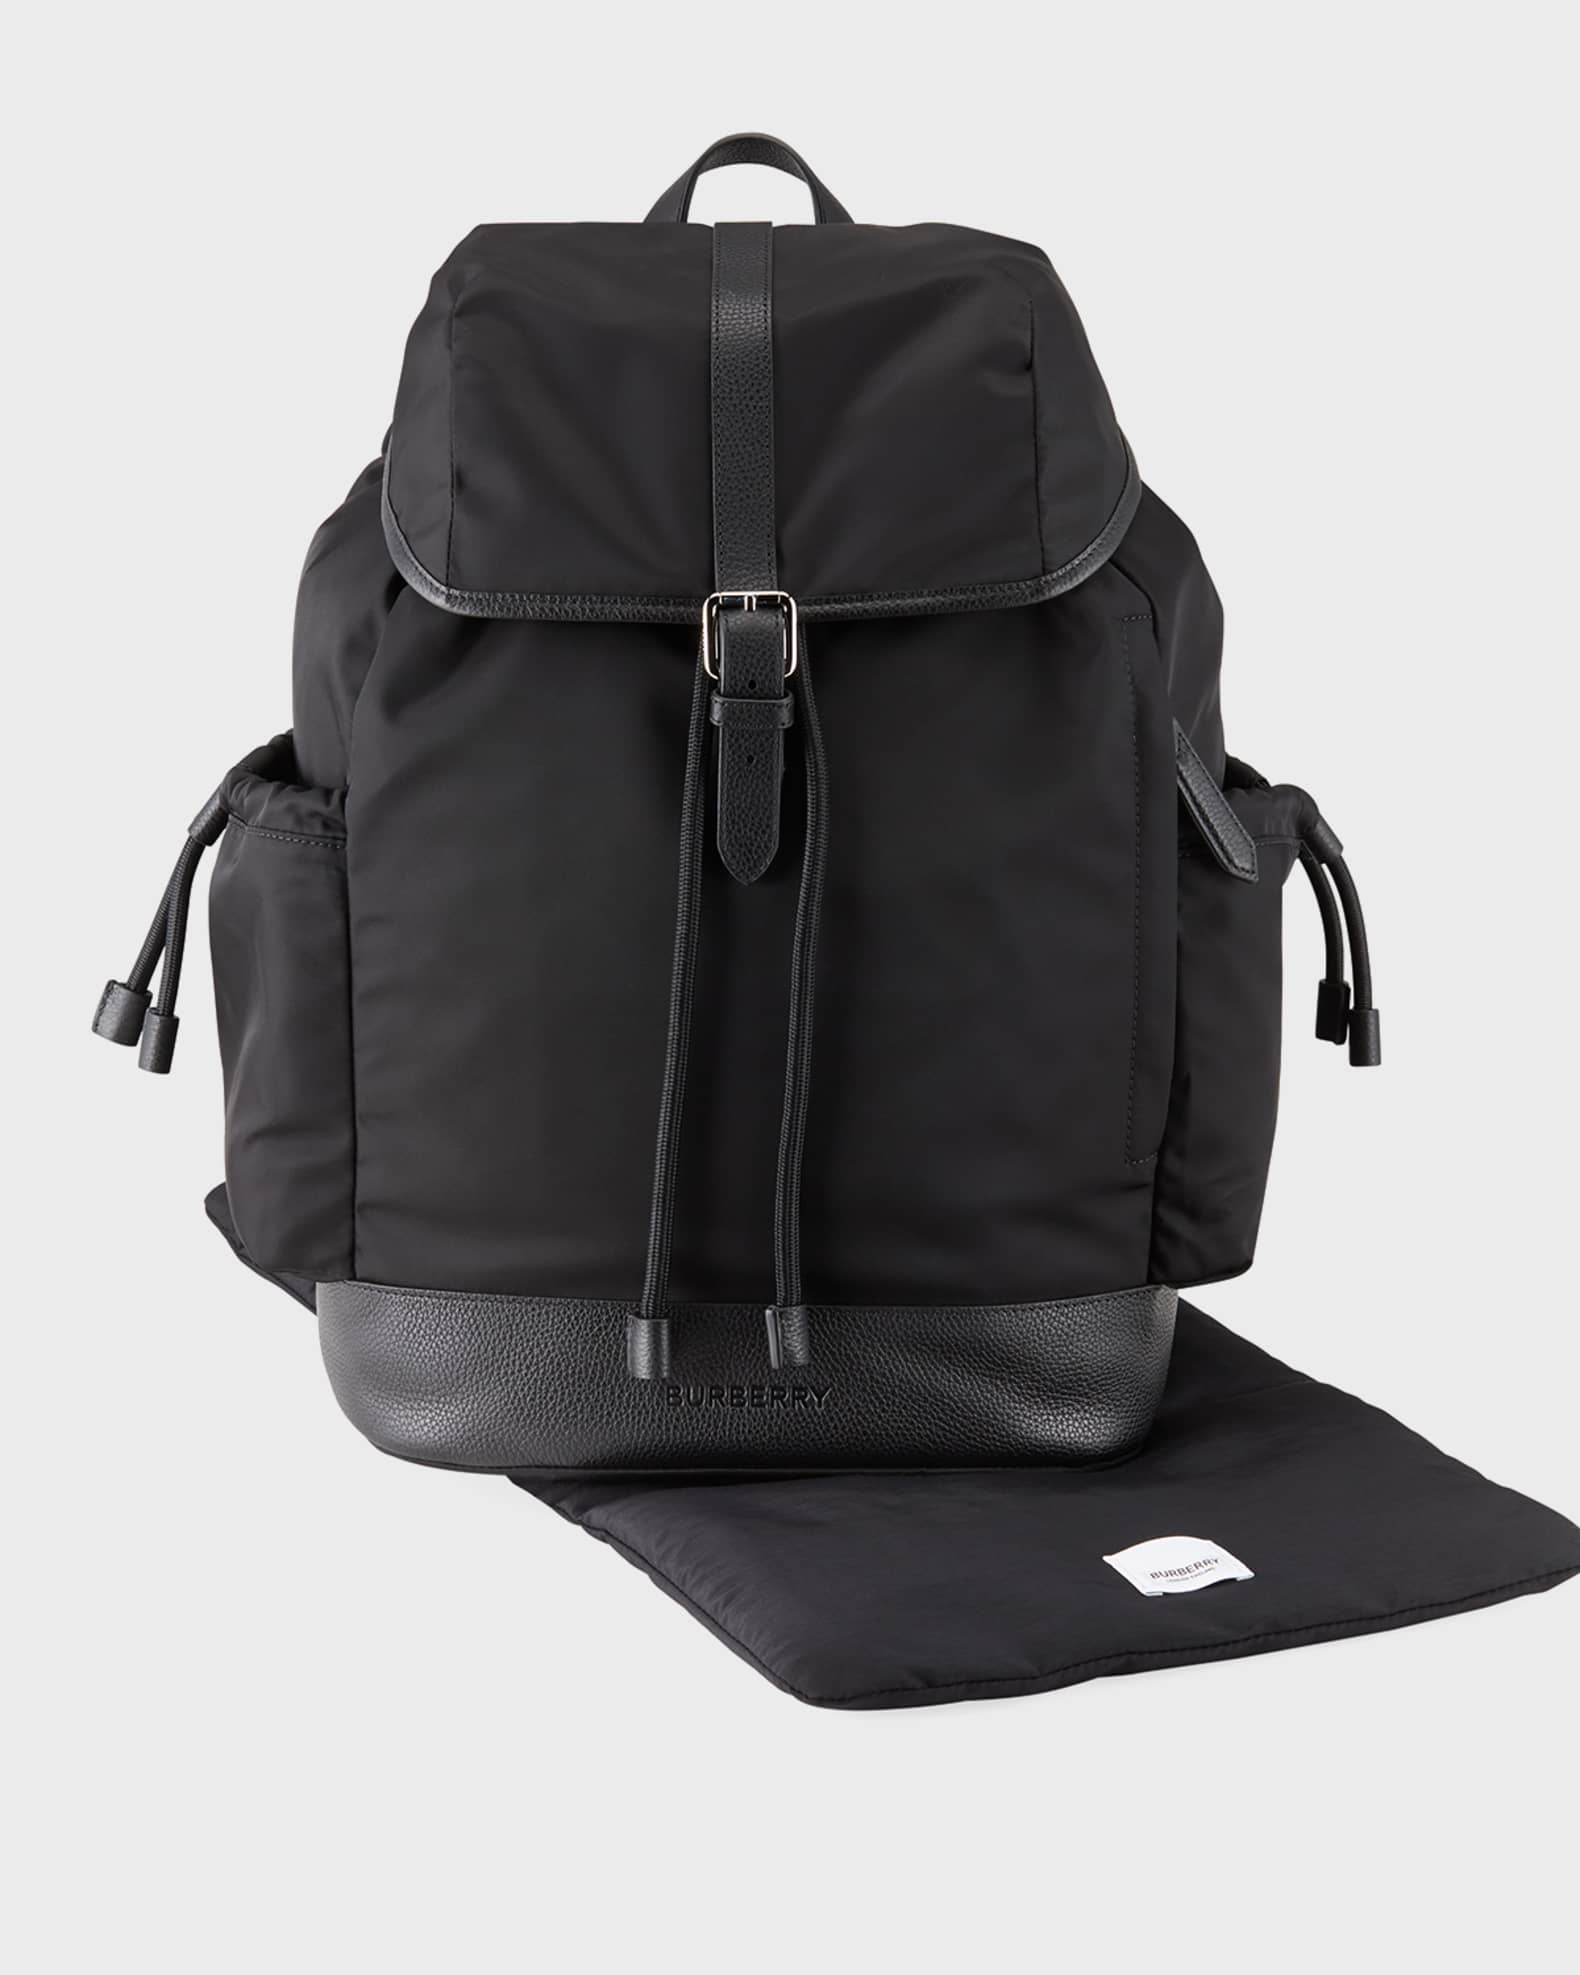 Burberry Watson Diaper Backpack | Neiman Marcus